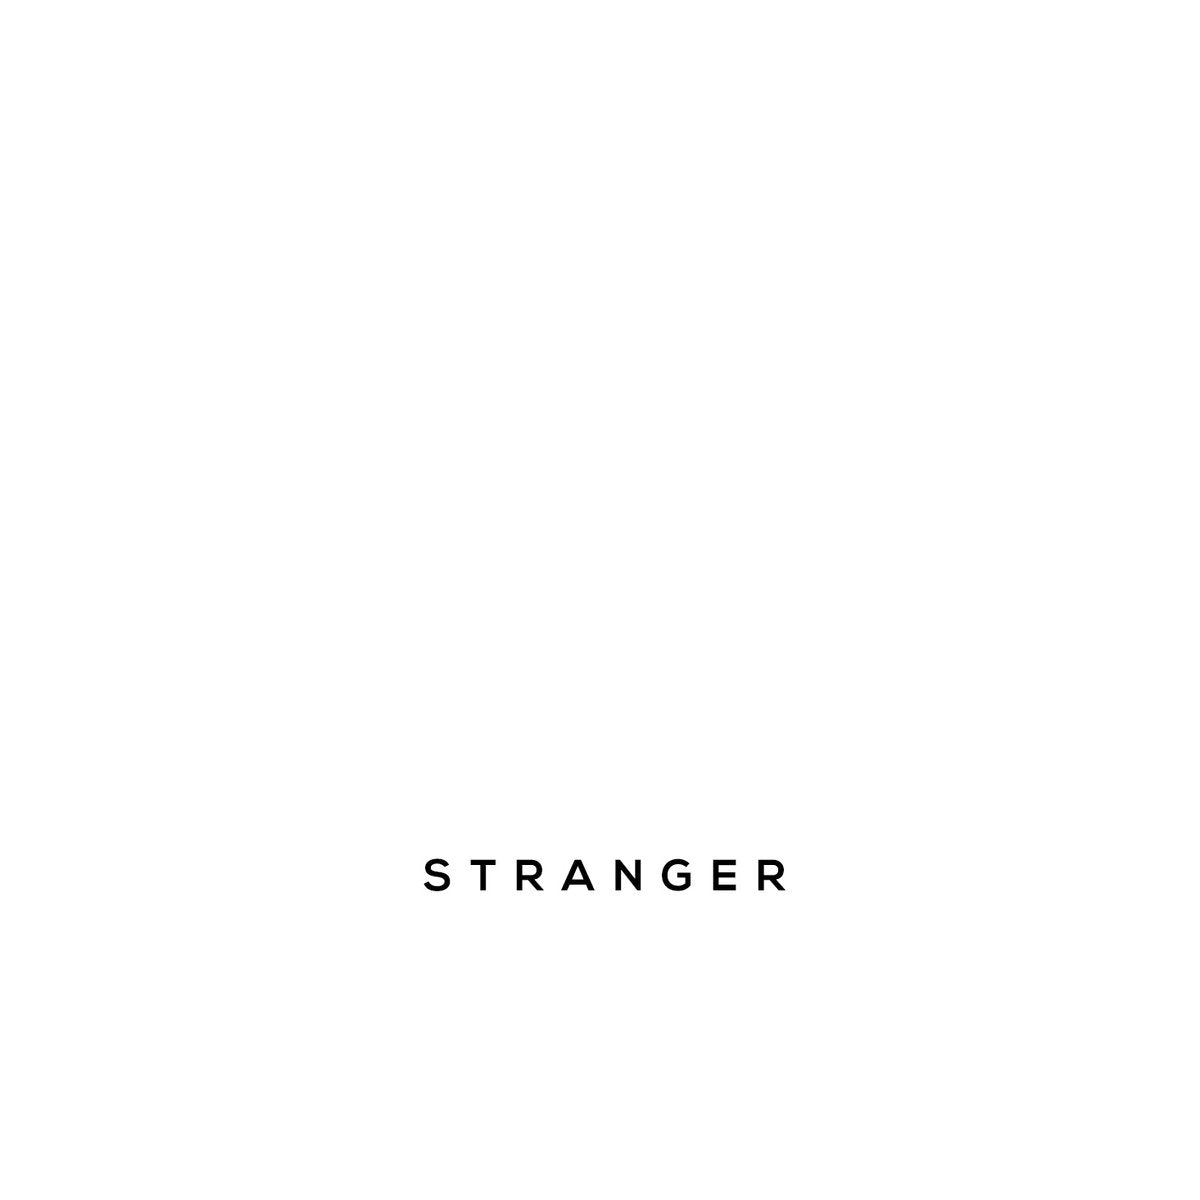 APEY 'STRANGER' ALBUM